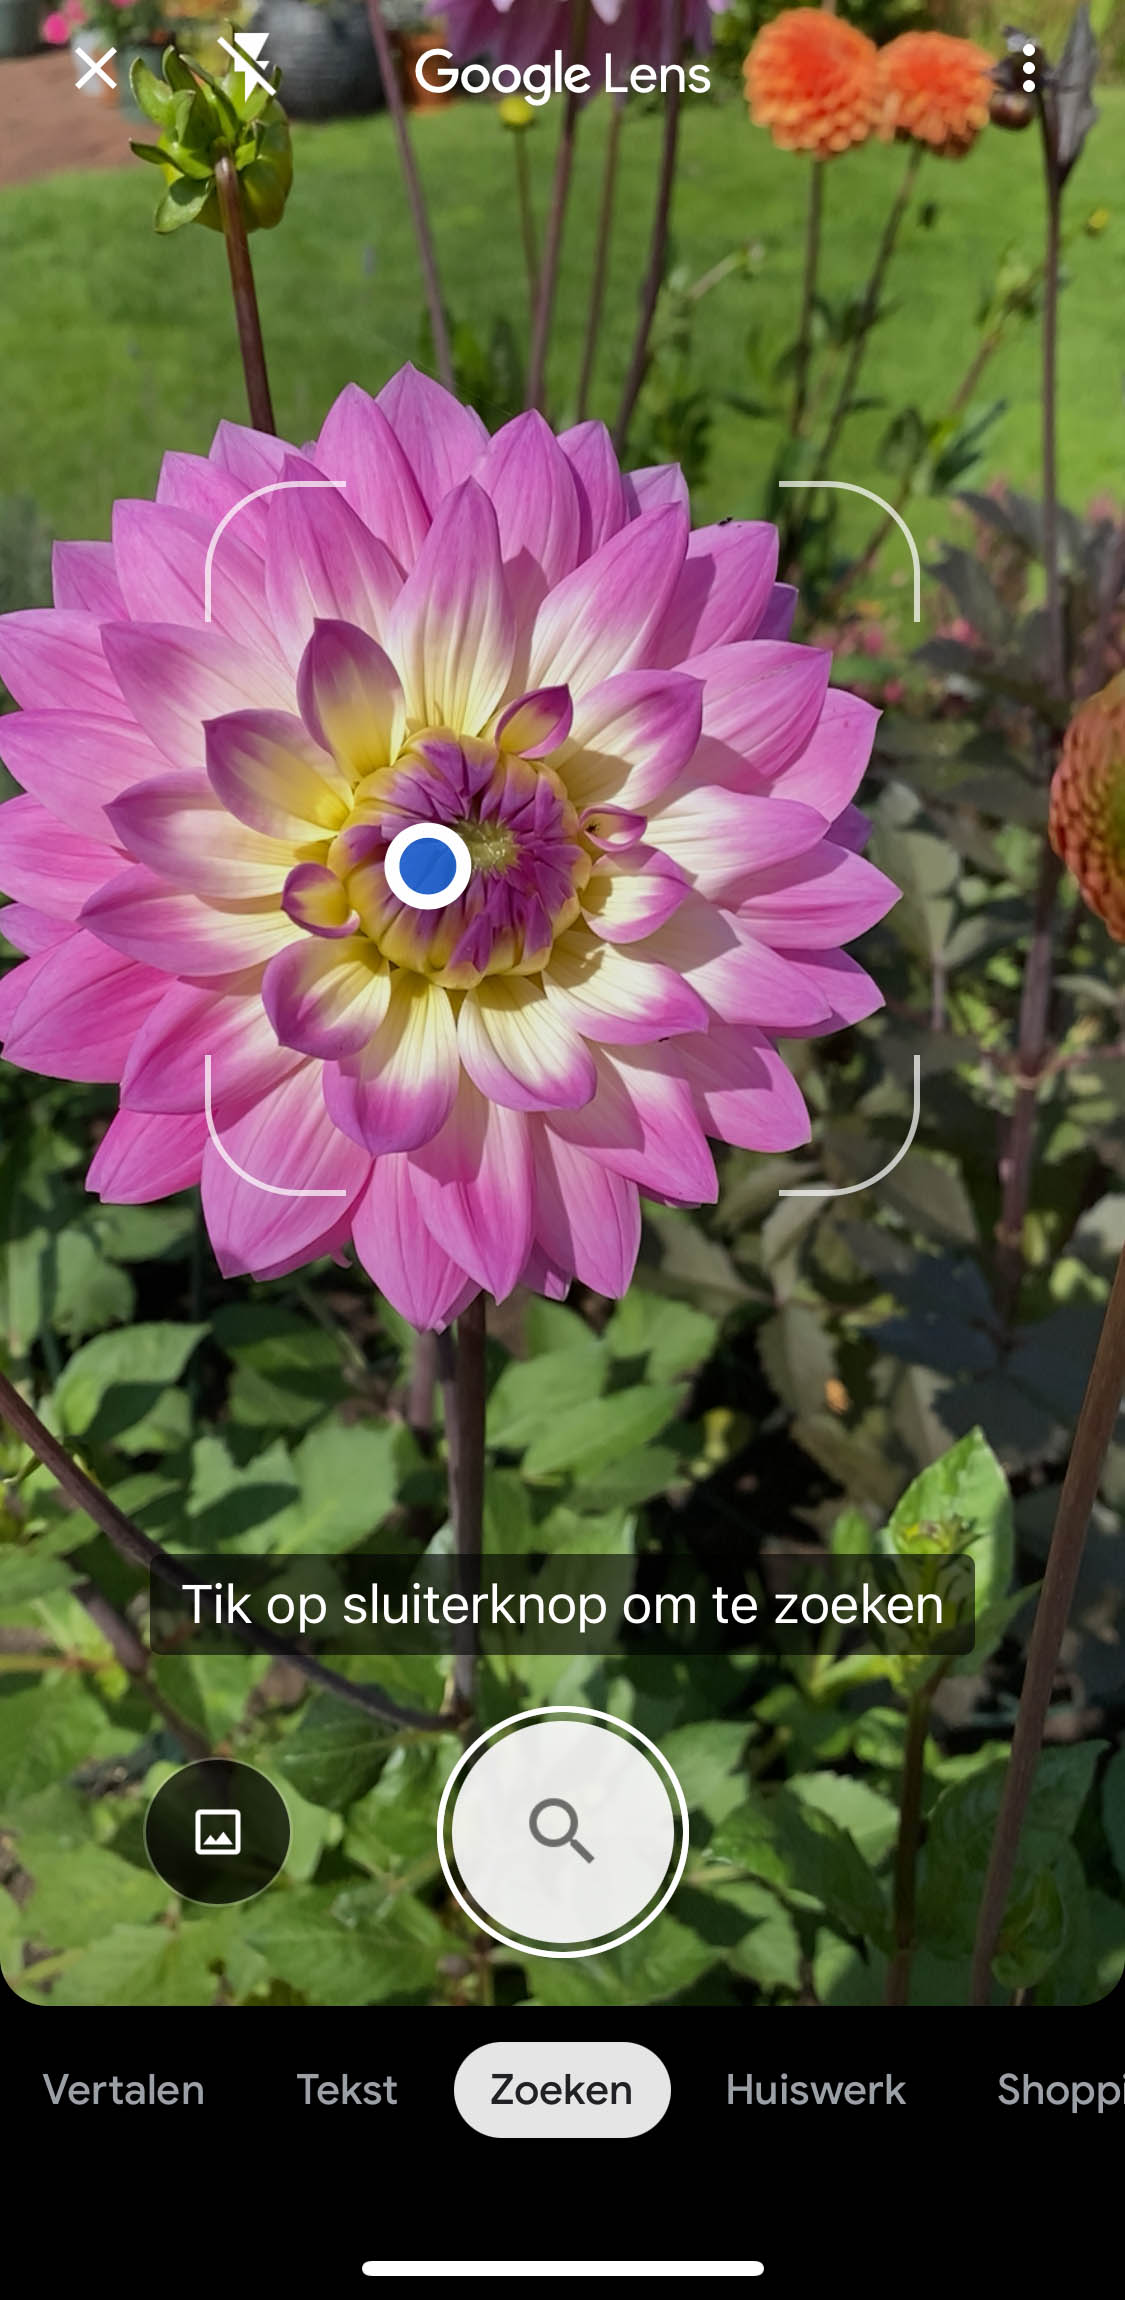 Google Lens met camera aan op paarse bloem gericht